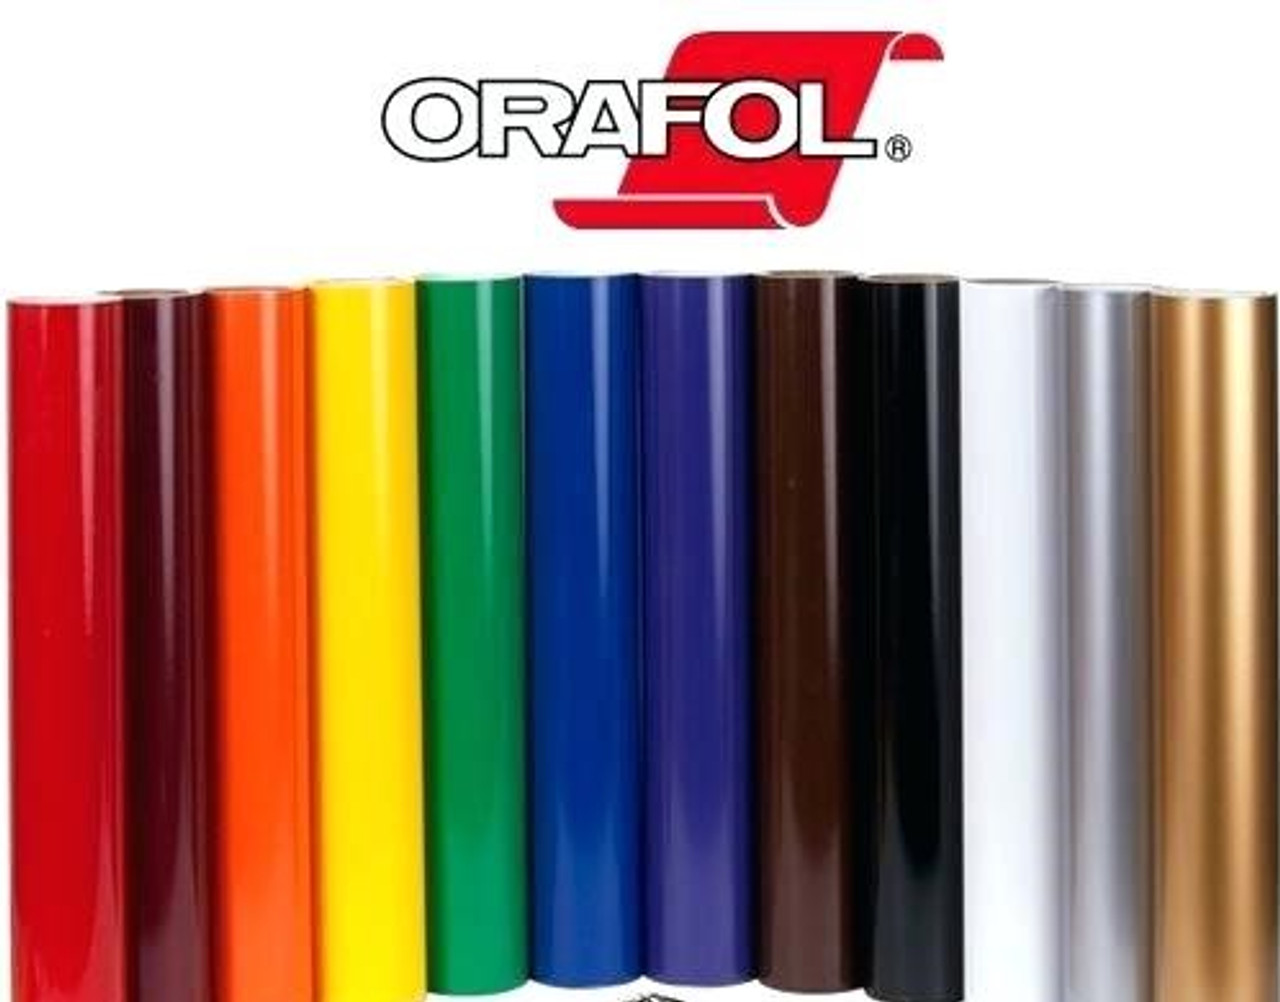 Oracal 651 - Adhesive Vinyl - 30 in x 10 yds - Black / 30 in x 10 yds